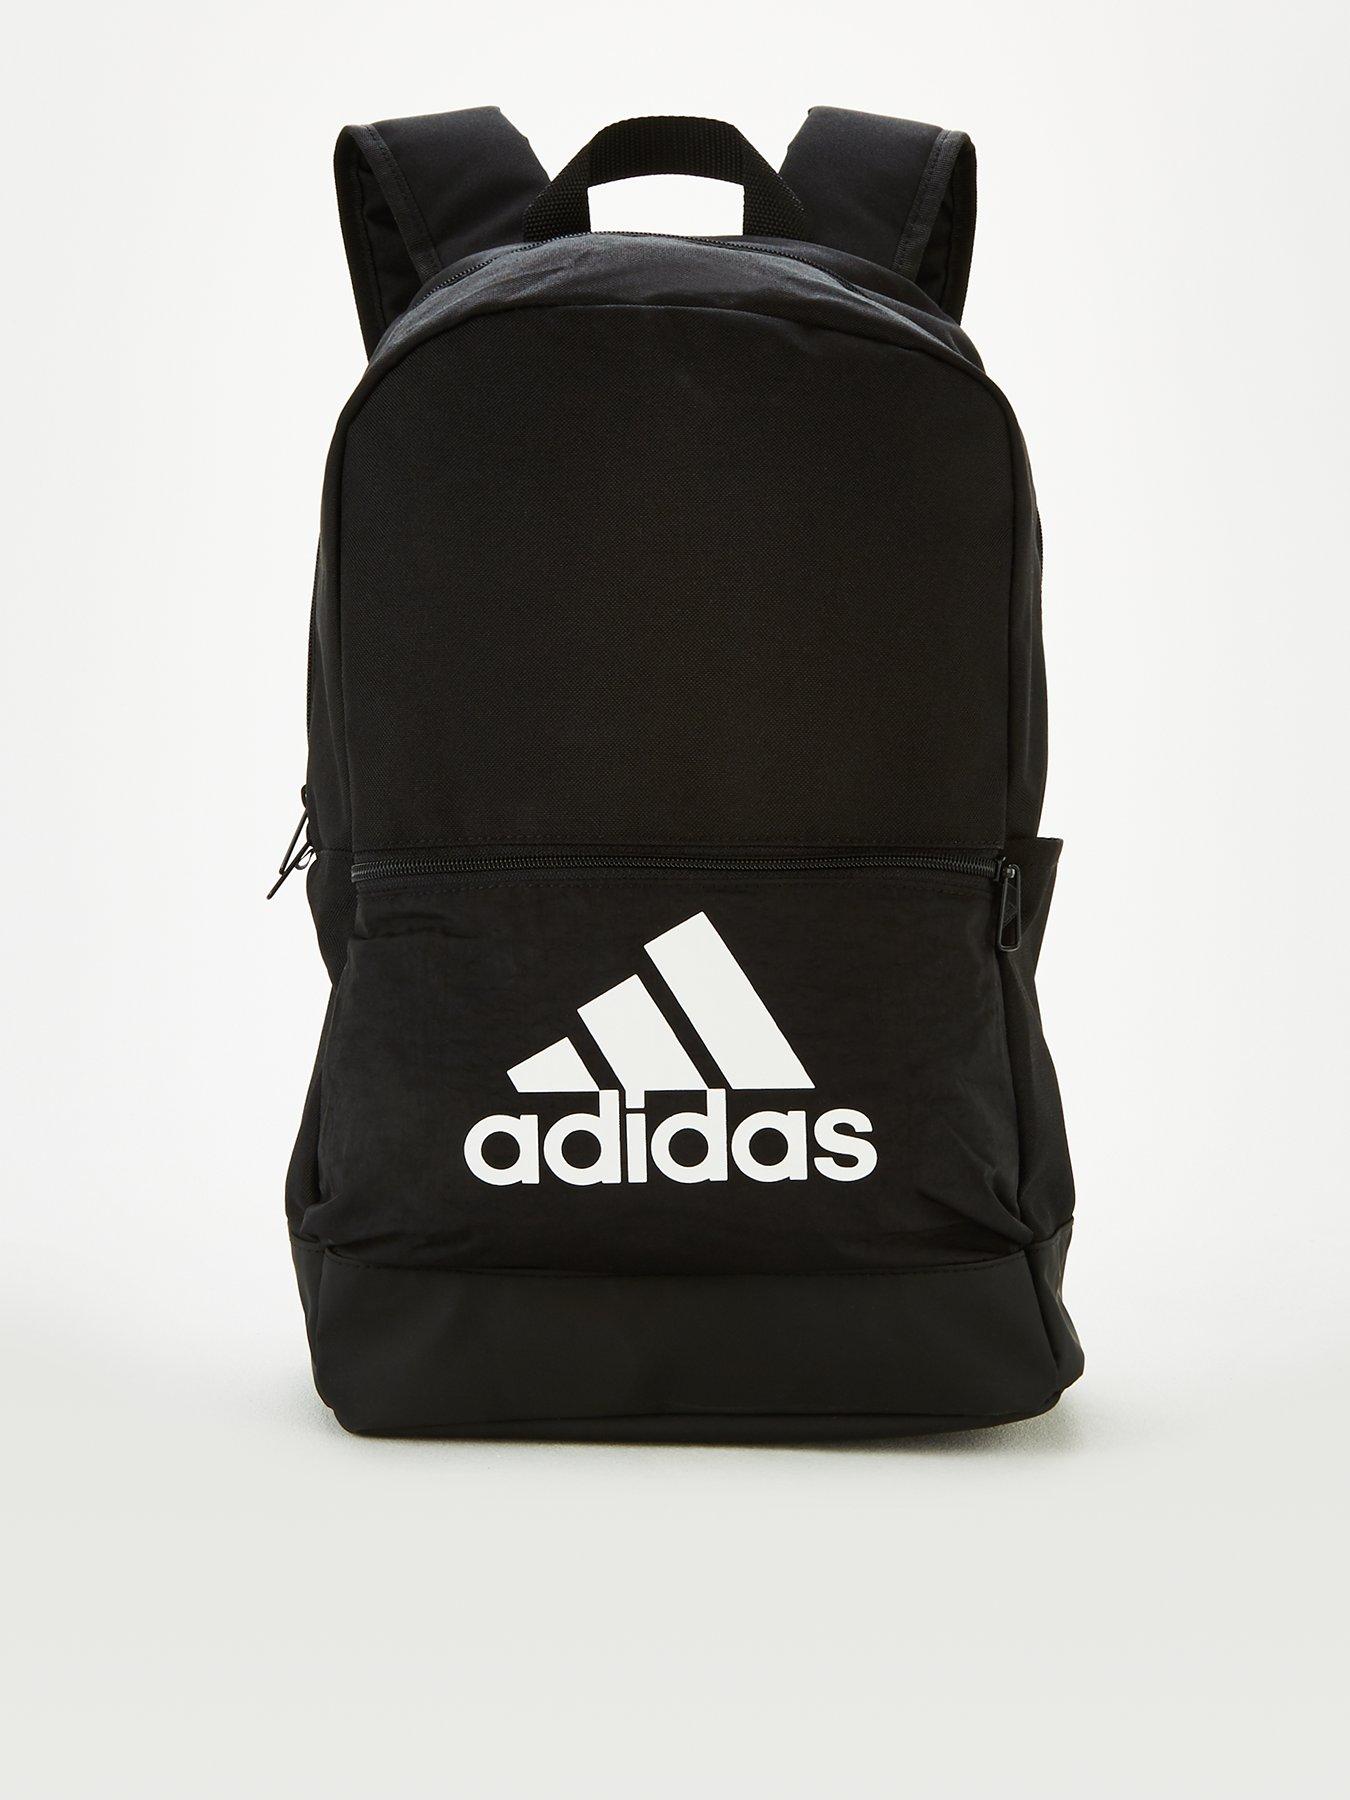 adidas classic backpack black